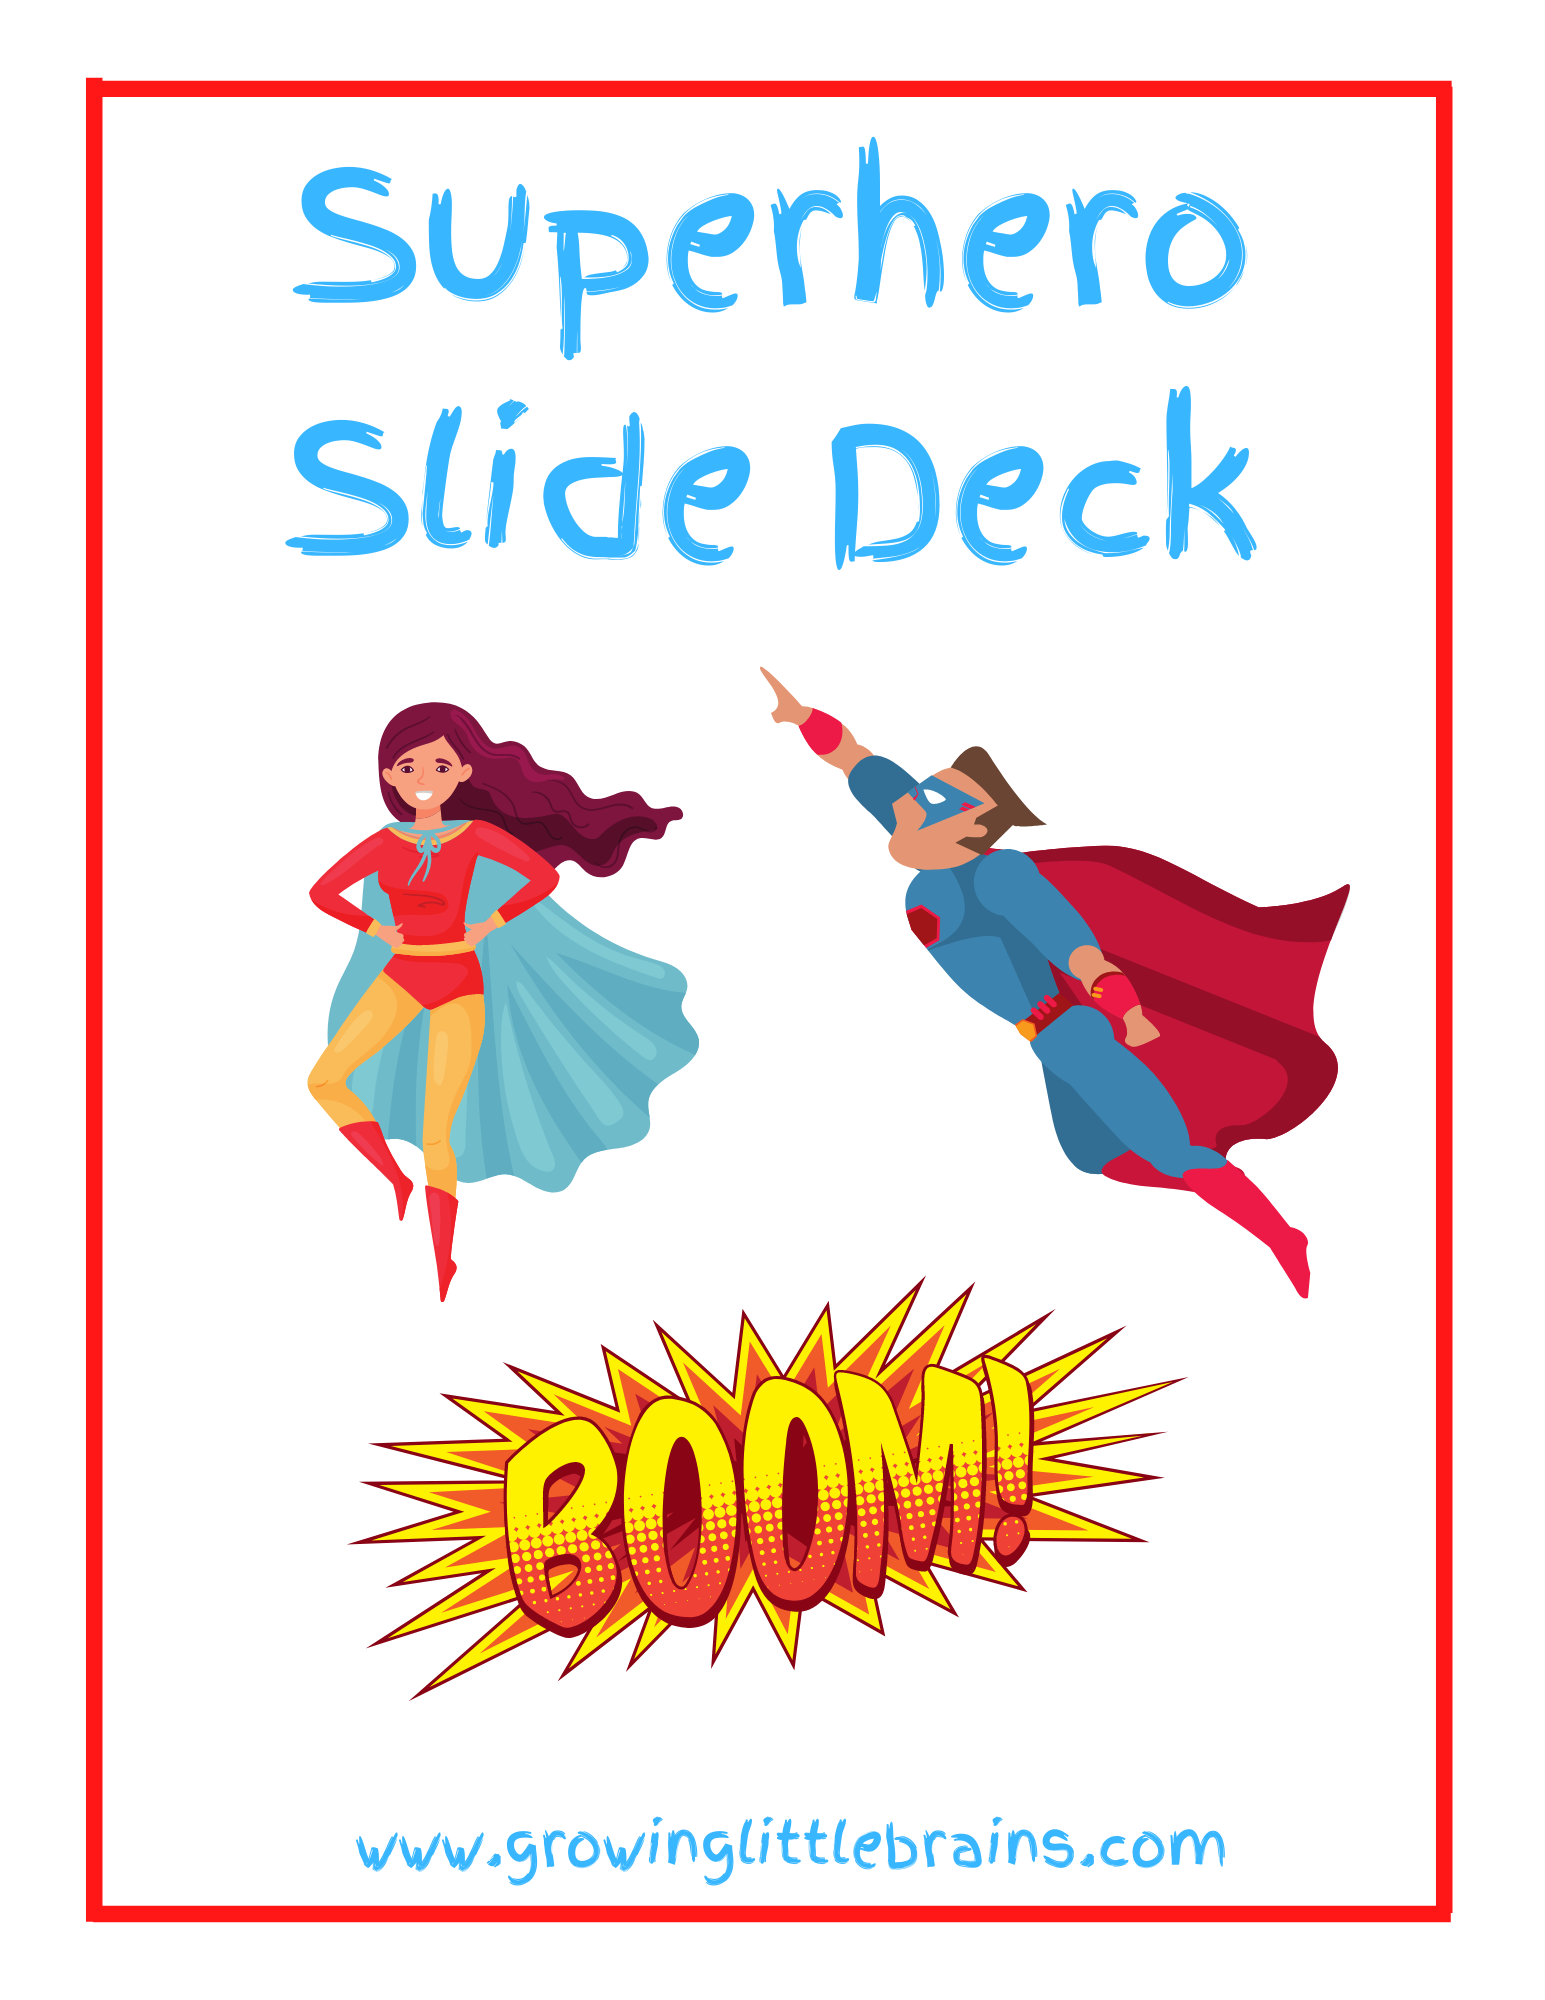 Superhero Slide Deck Cover page.png